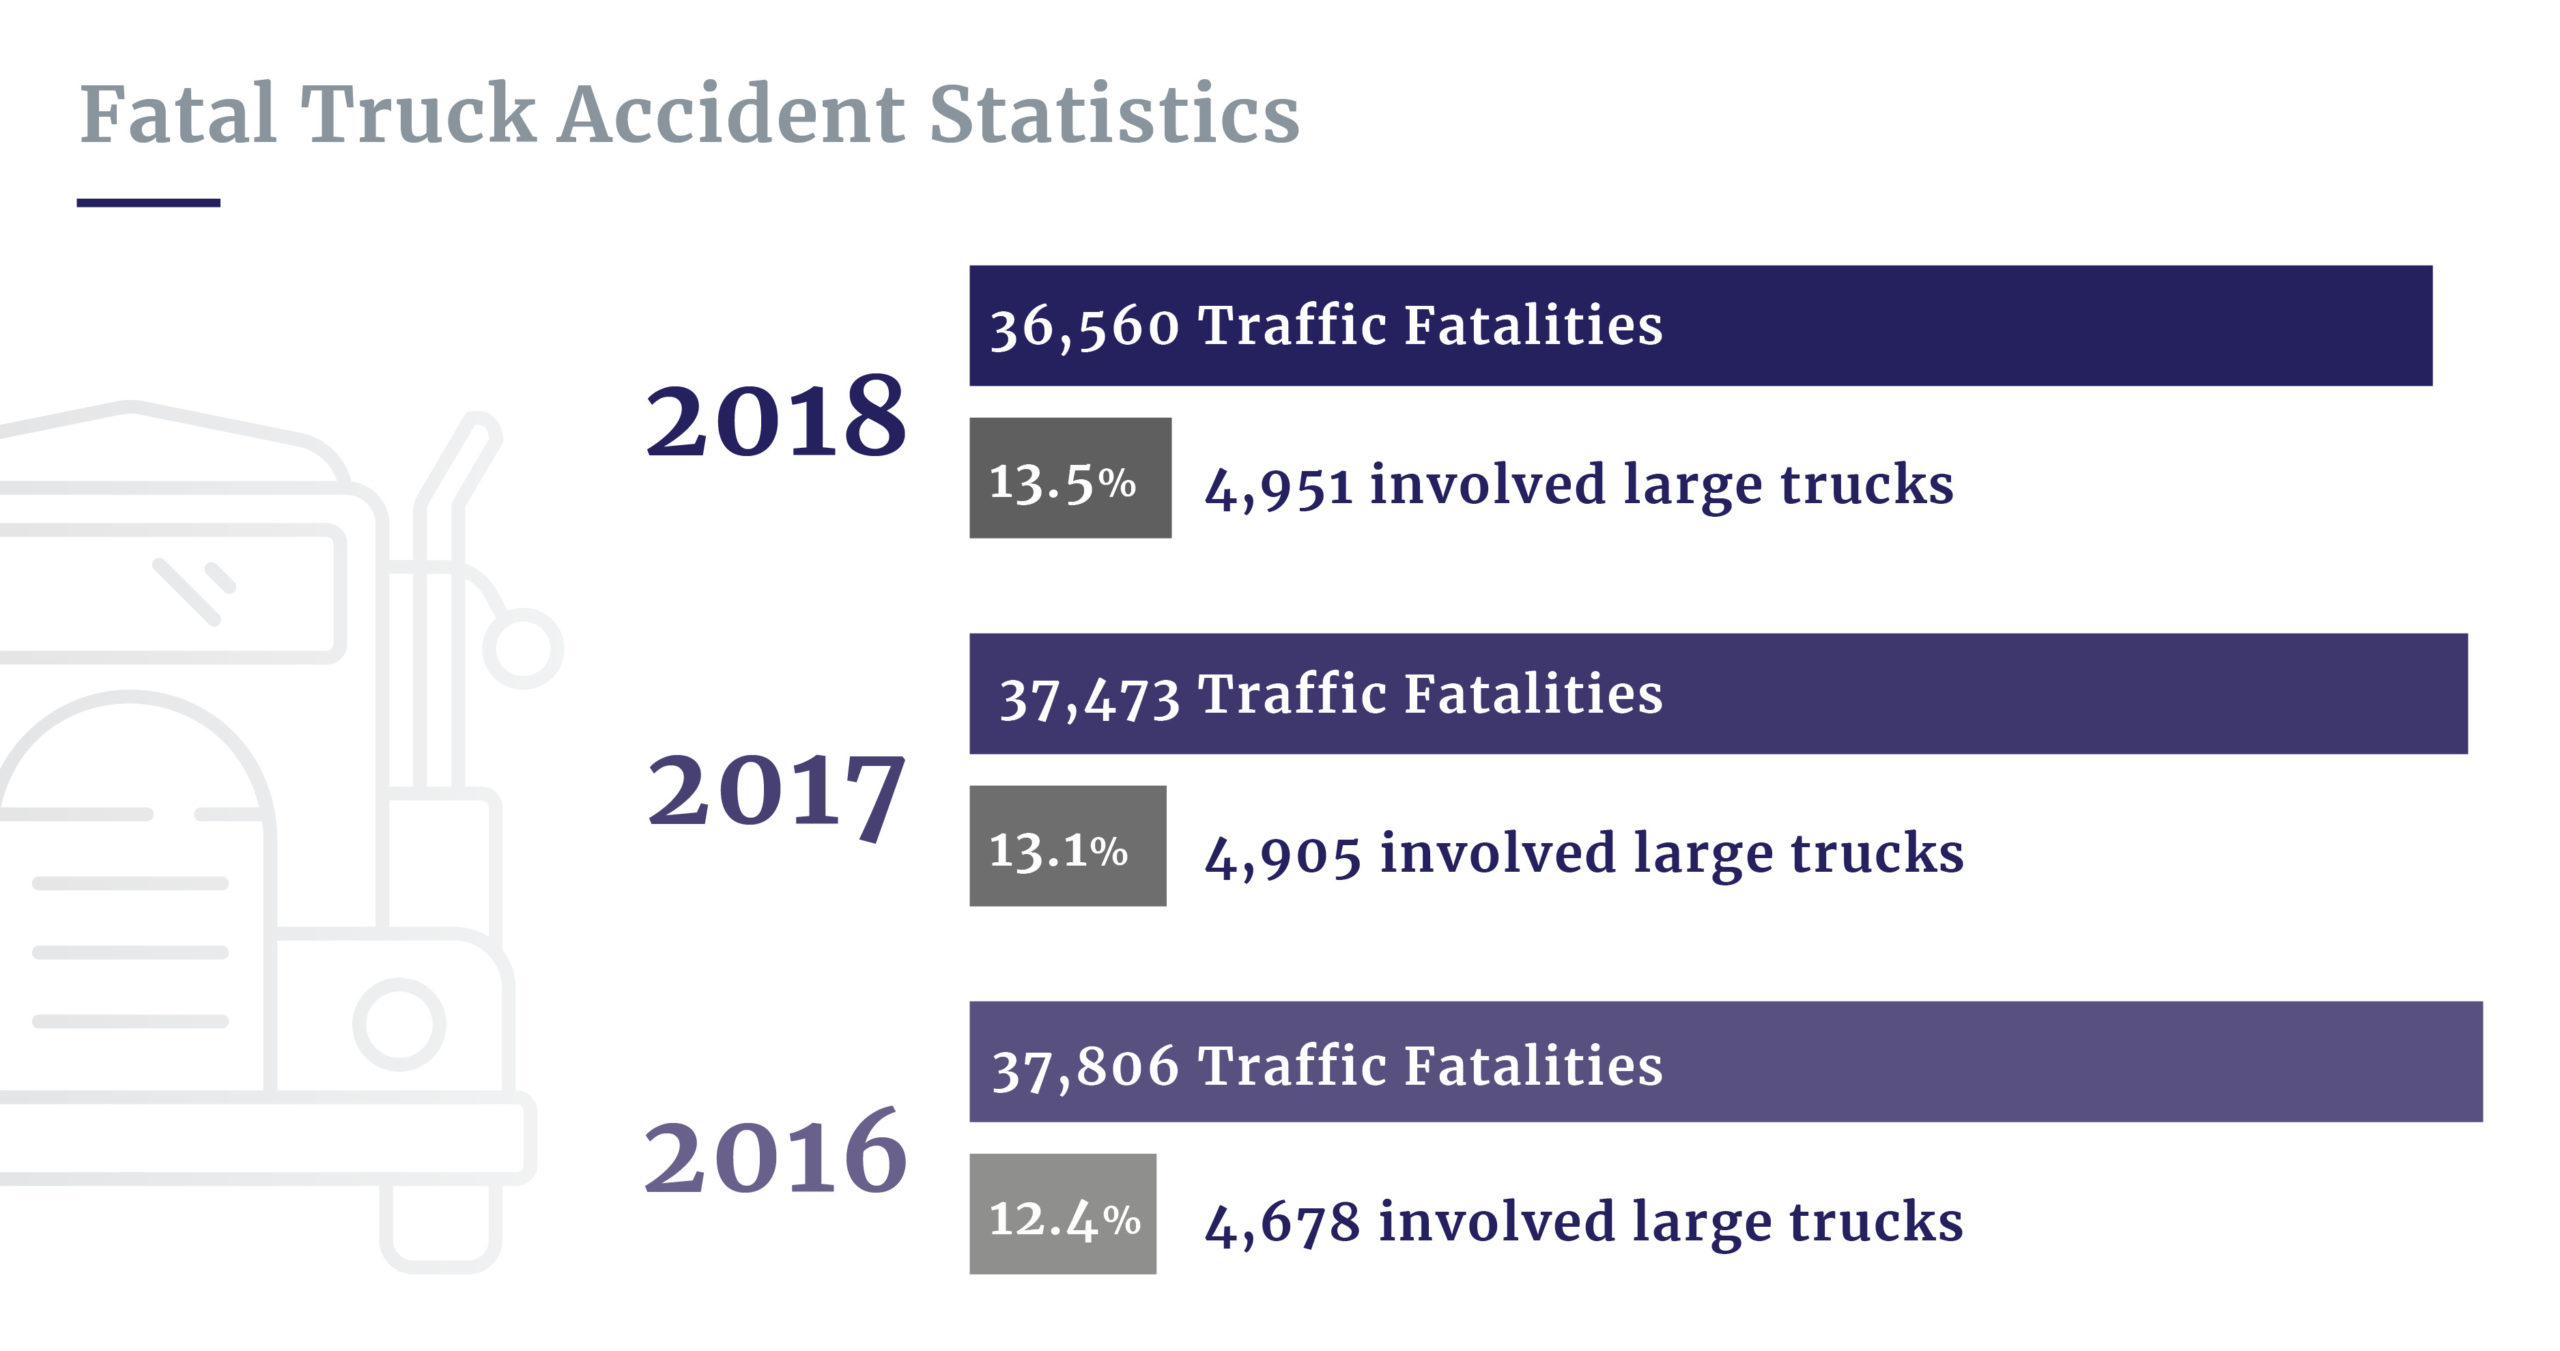 Fatal truck accident statistics